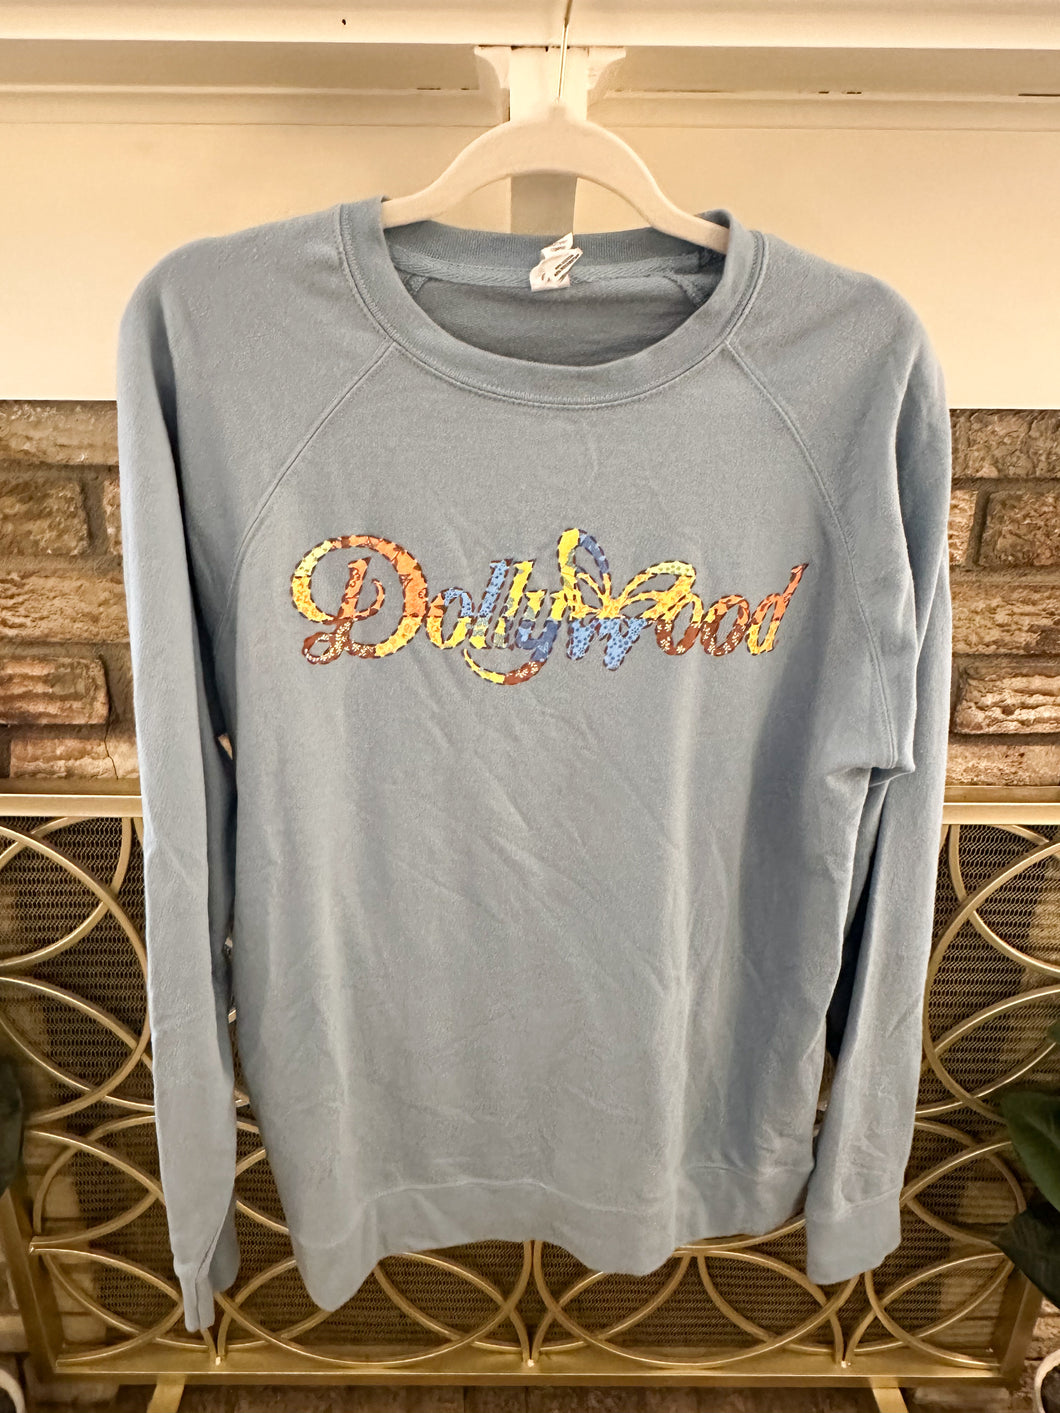 Dollywood sweatshirt